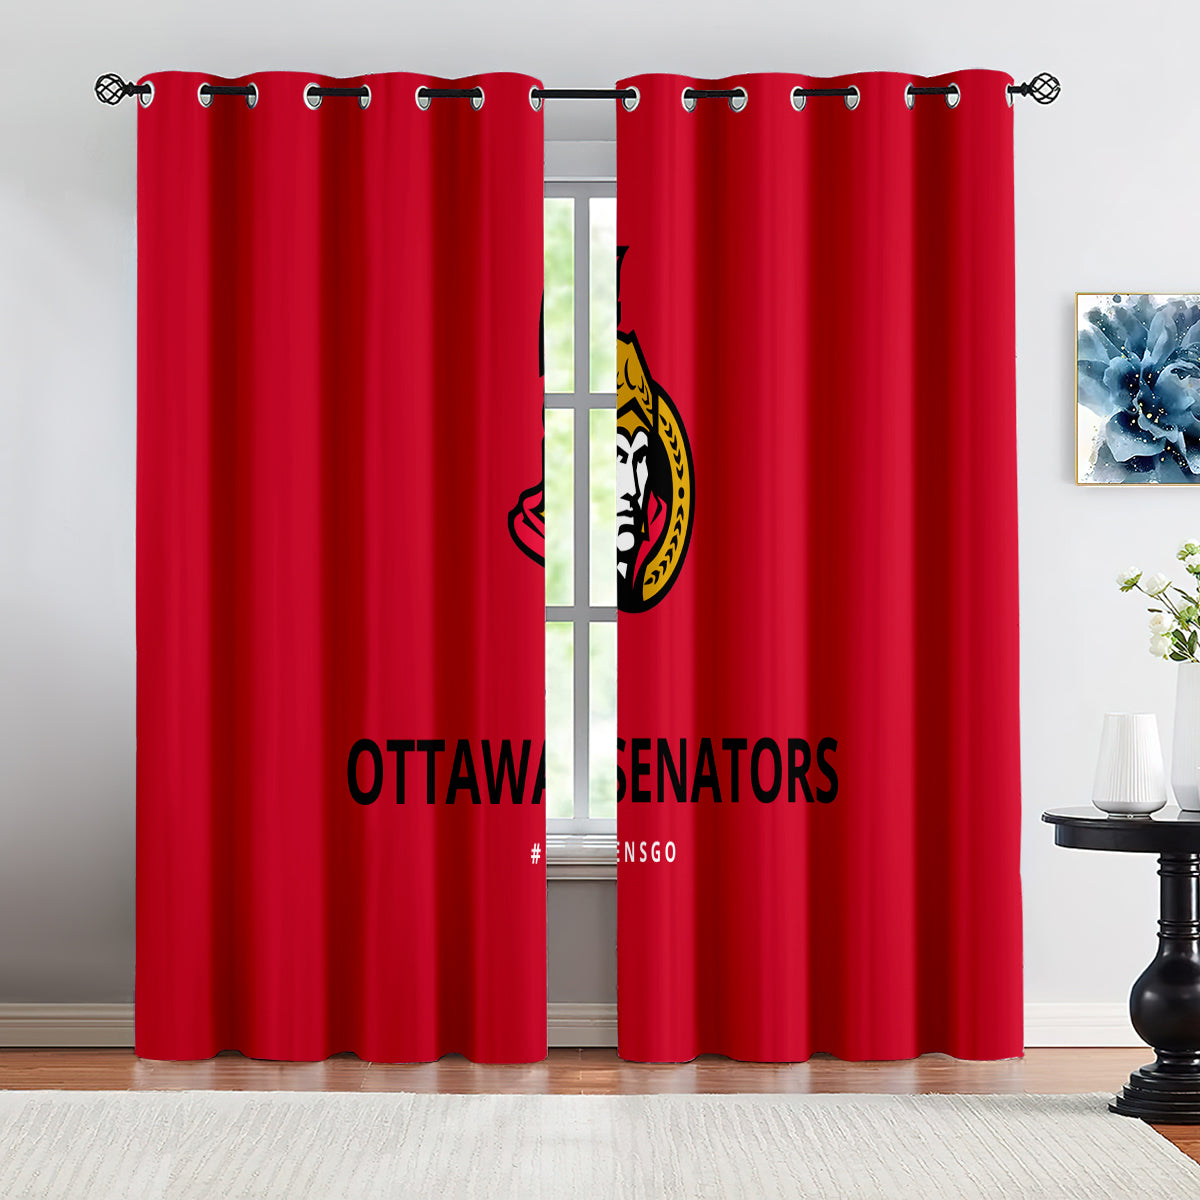 Ottawa Senators Hockey League Blackout Curtains Drapes For Window Treatment Set